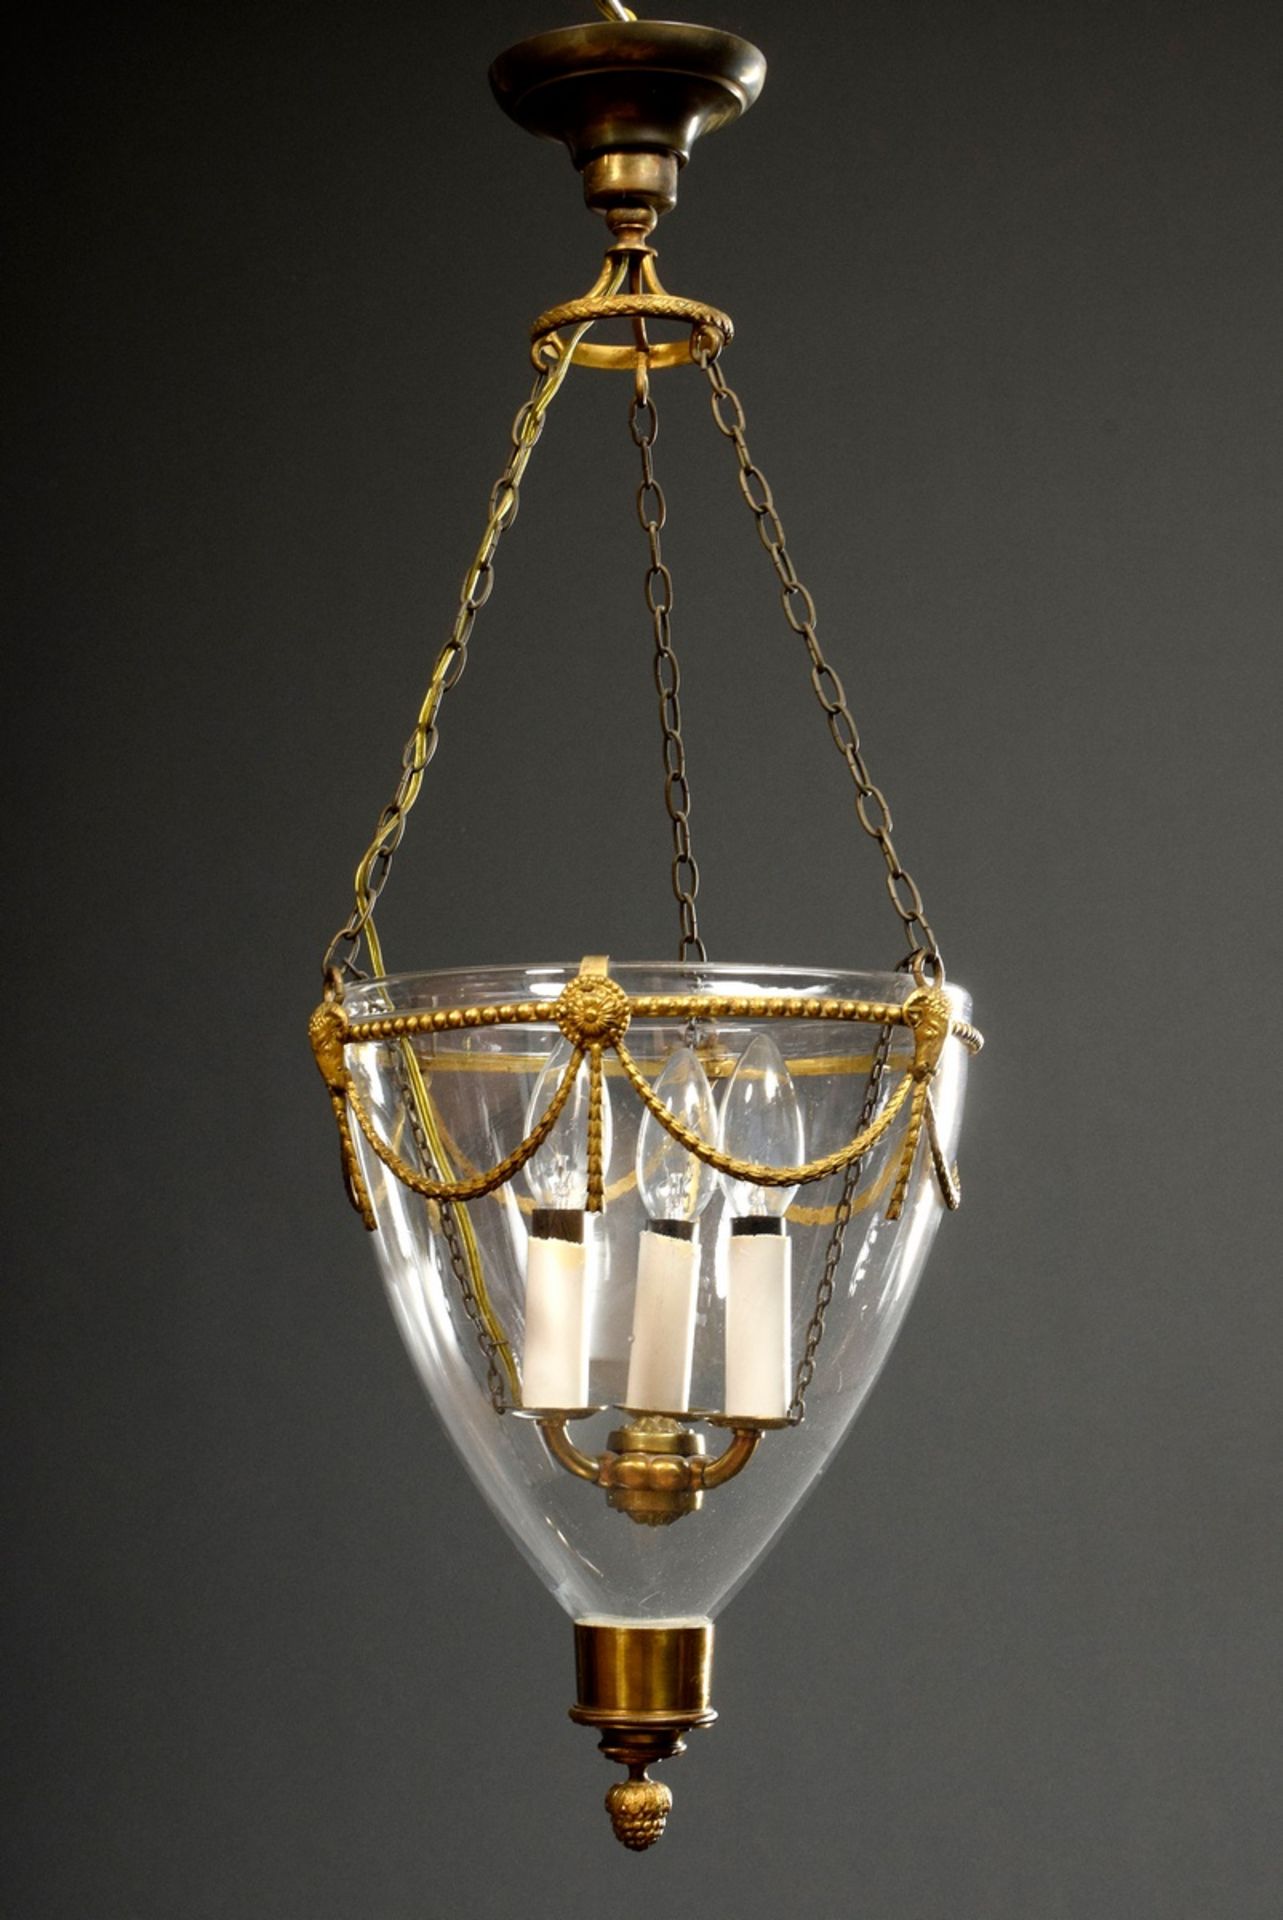 Kleine klassizistische Deckenampel mit feuerverg | Small classicistic ceiling lamp with fire-gilded